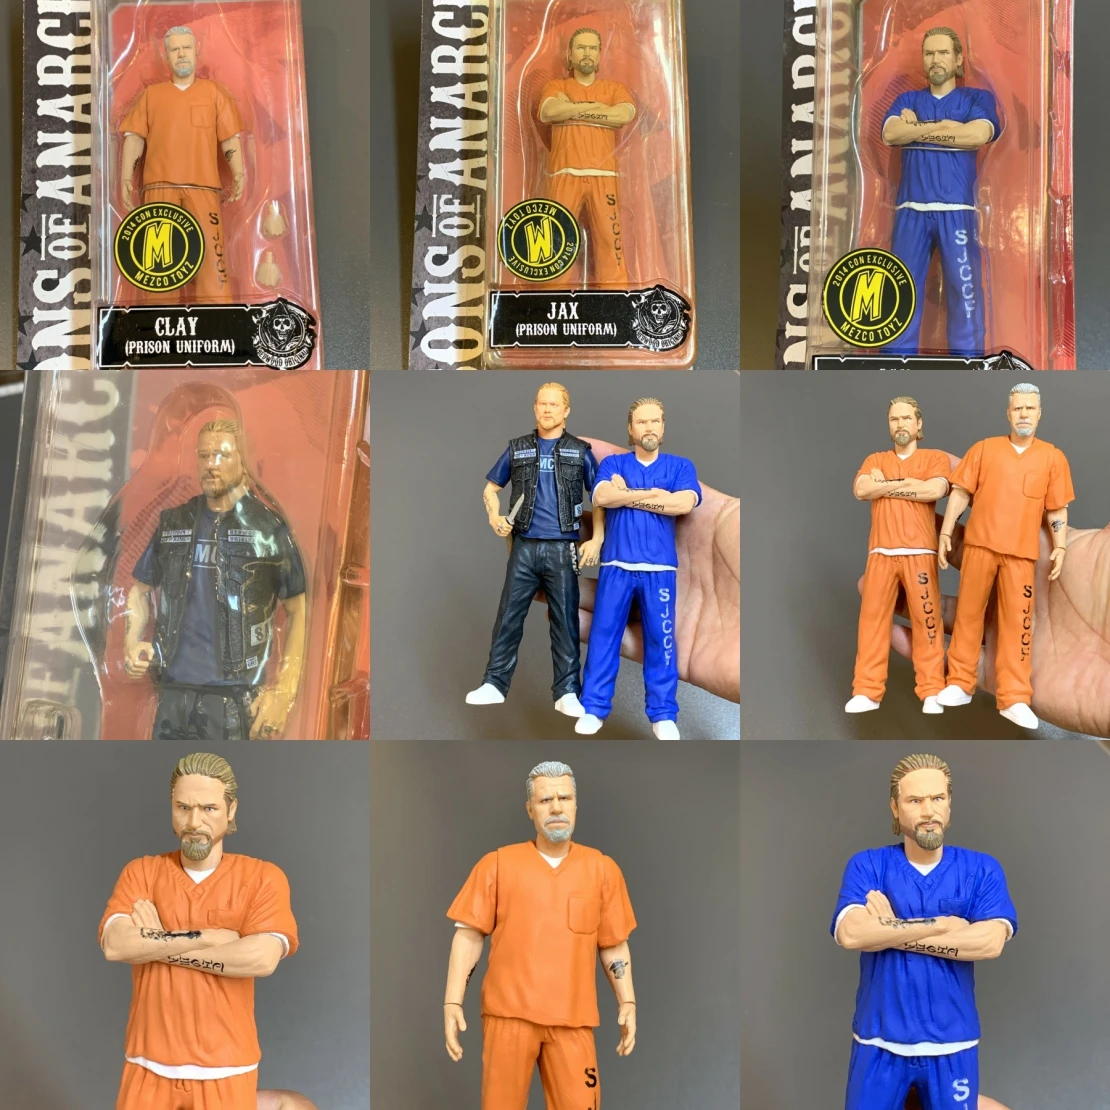 Ons of anarchy blue orange clay jax prison uniform man action figure 2014 con exclusive thumb200